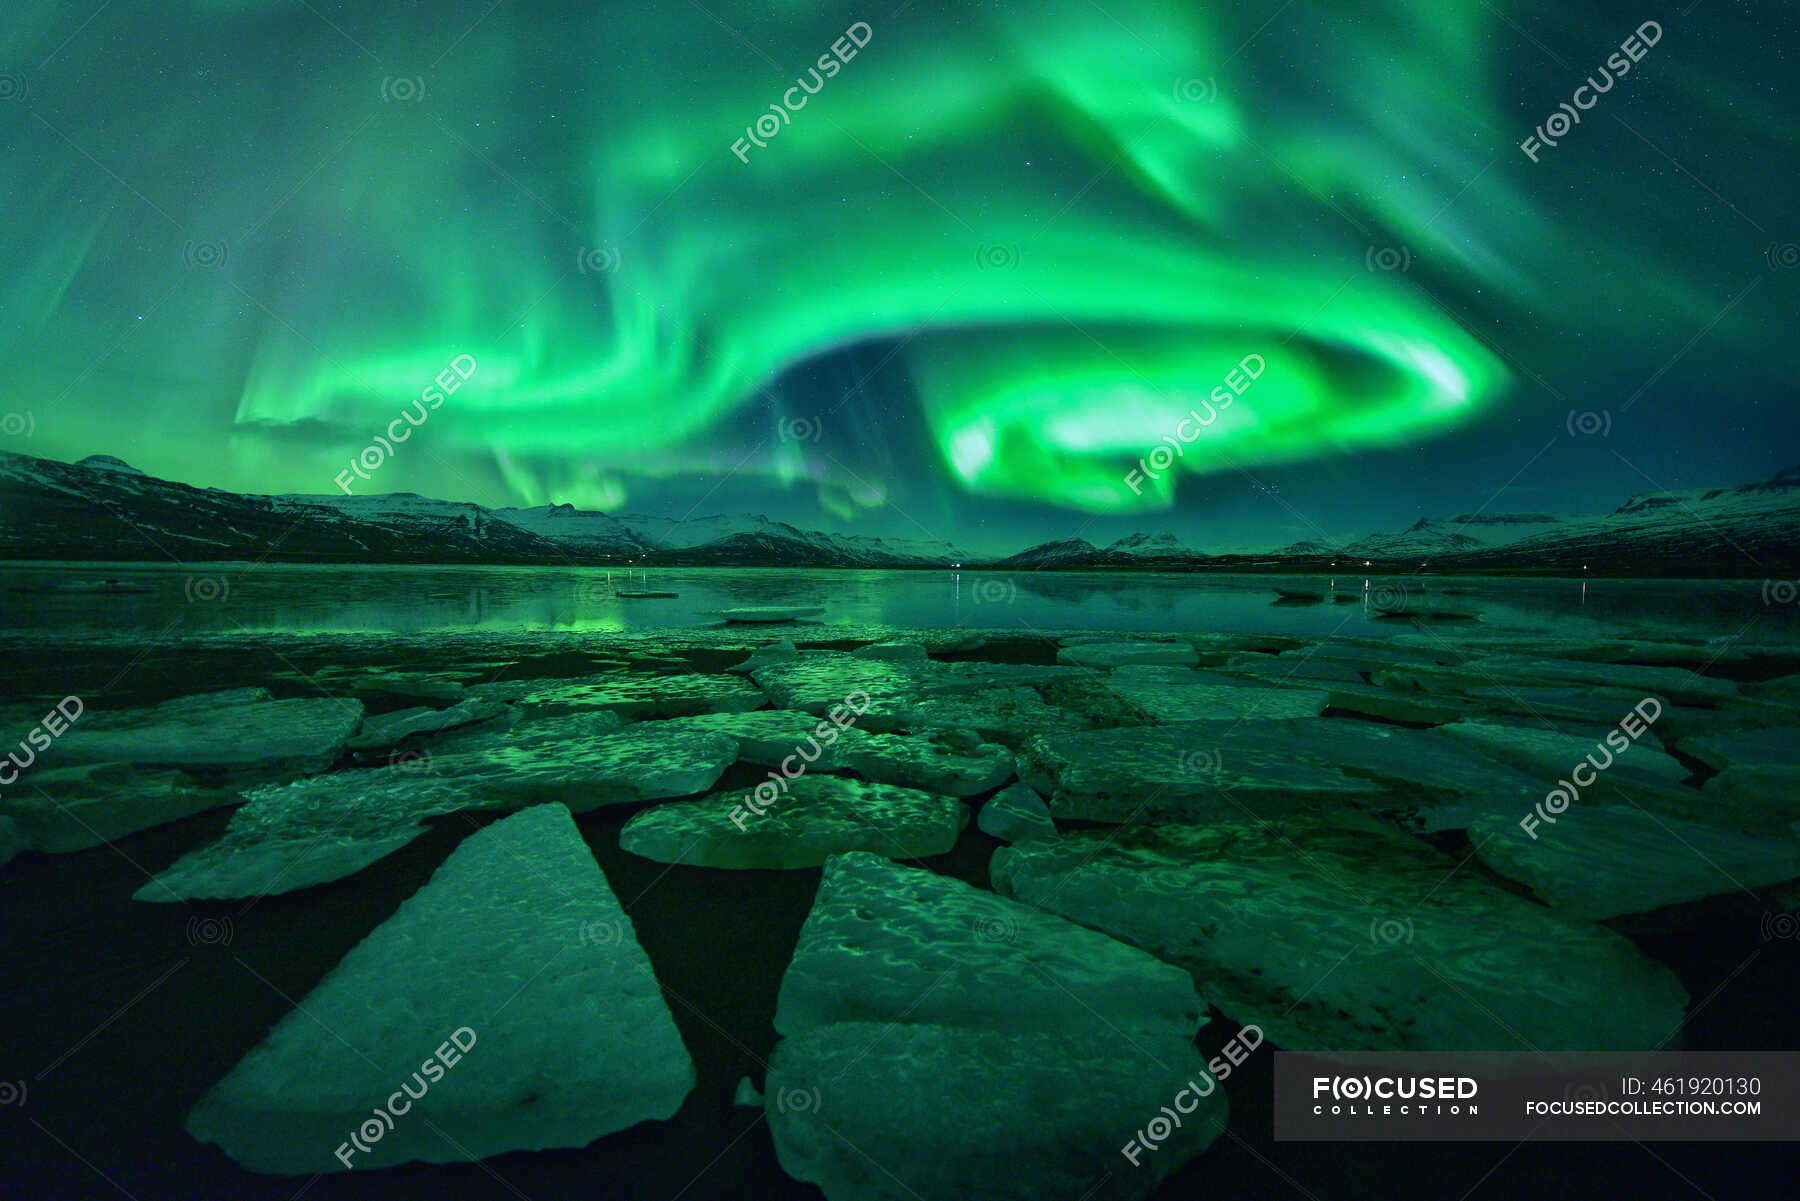 Northern lights over Jokulsarlon glacial lagoon, Vatnajokull Glacier National Park, — famous beach - Stock Photo | #461920130